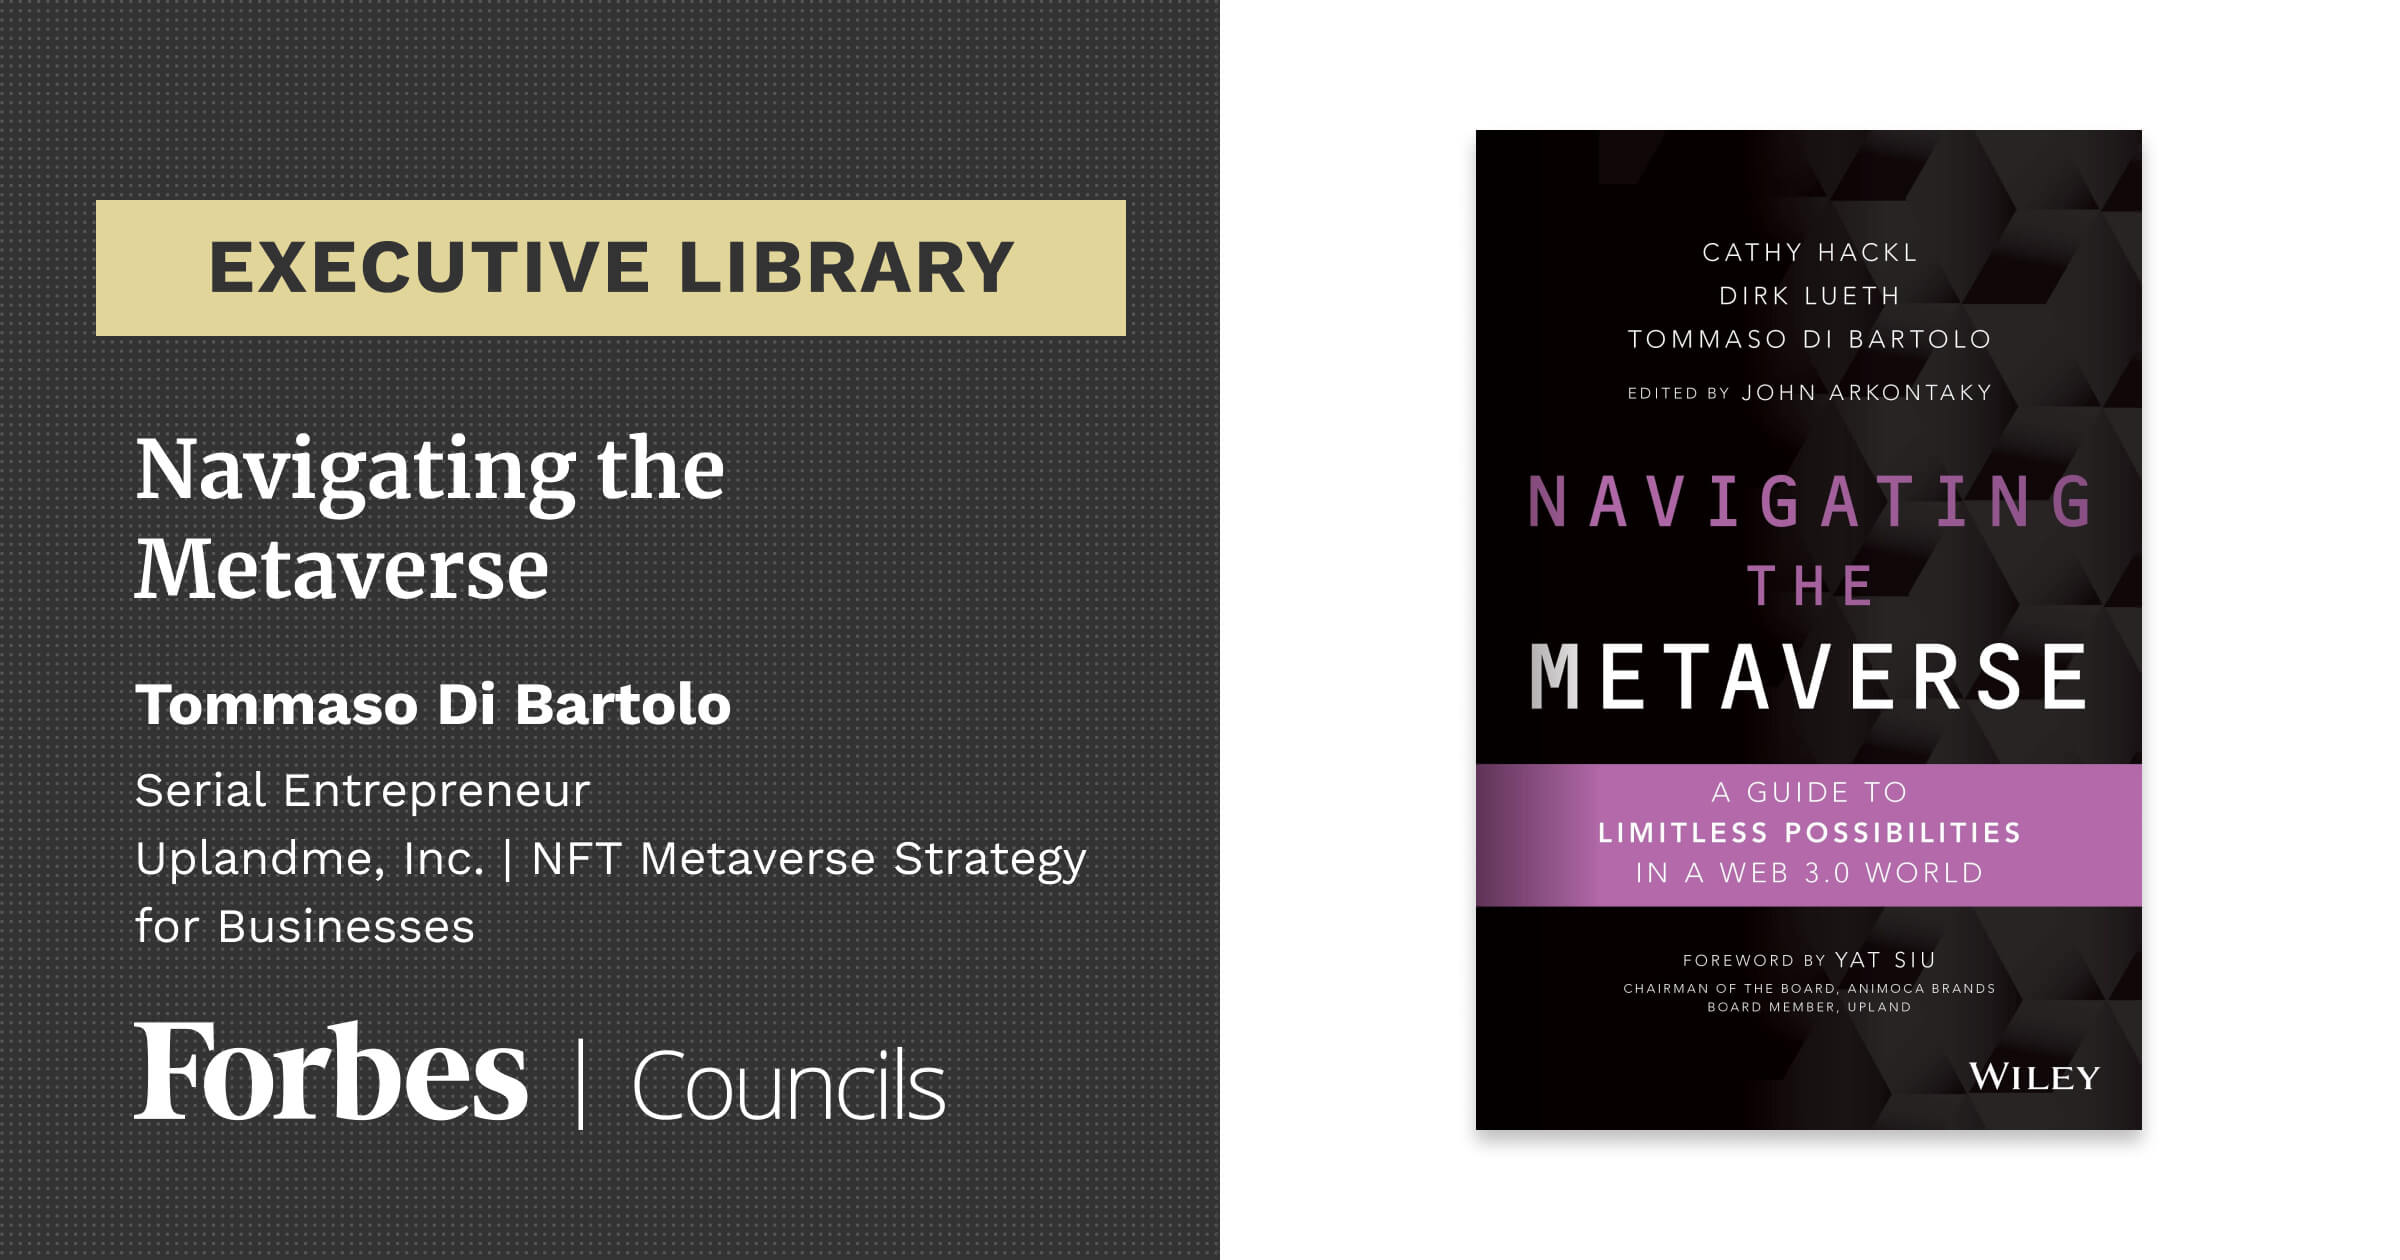 Navigating the Metaverse by Tommaso Di Bartolo